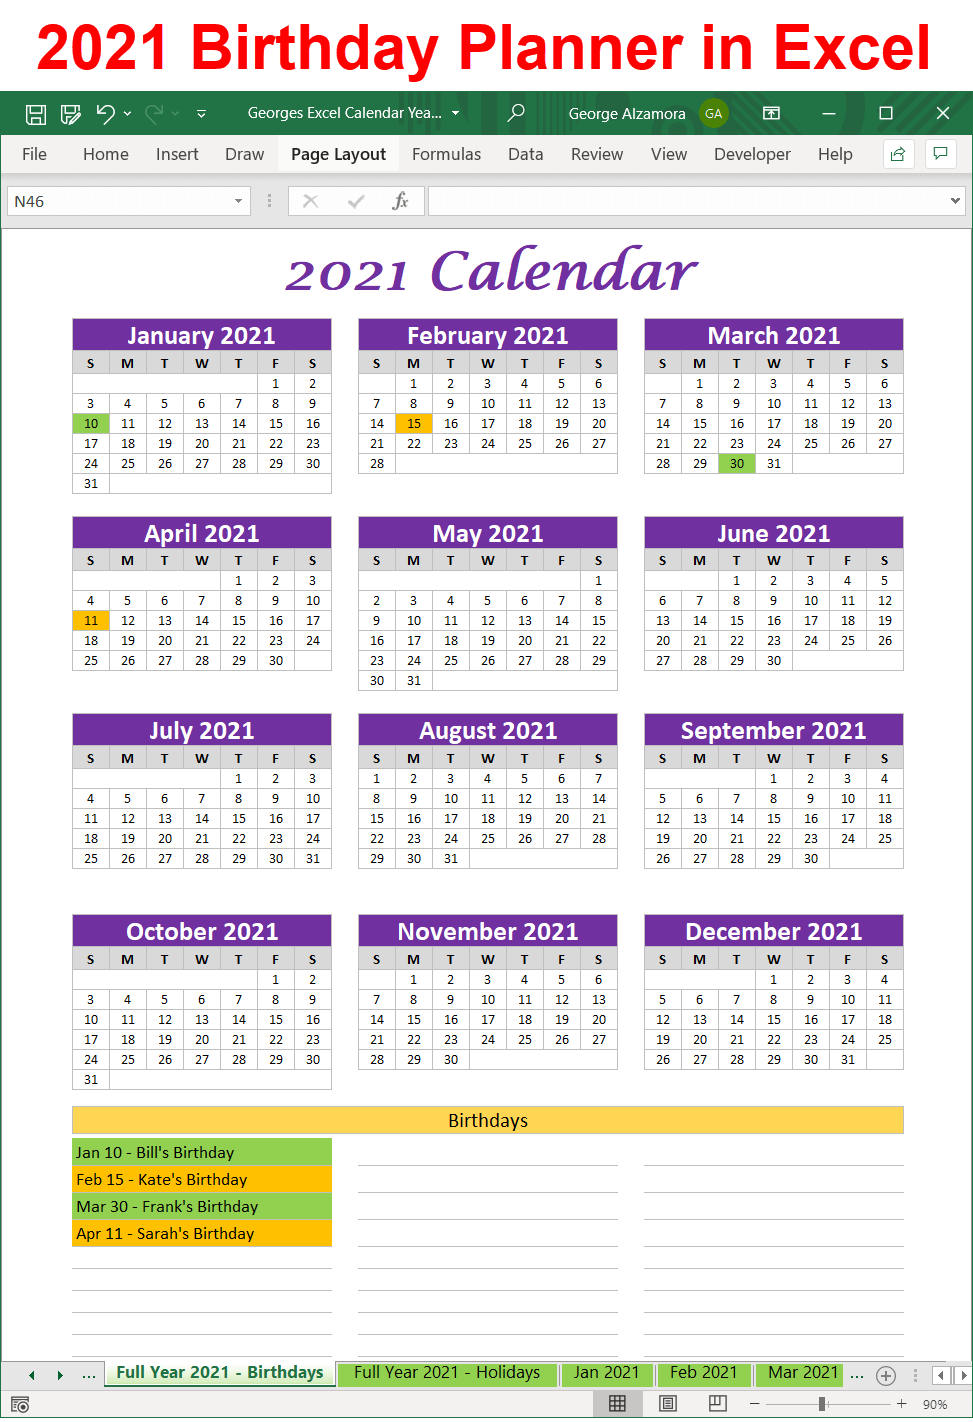 2021 calendar birthday planner